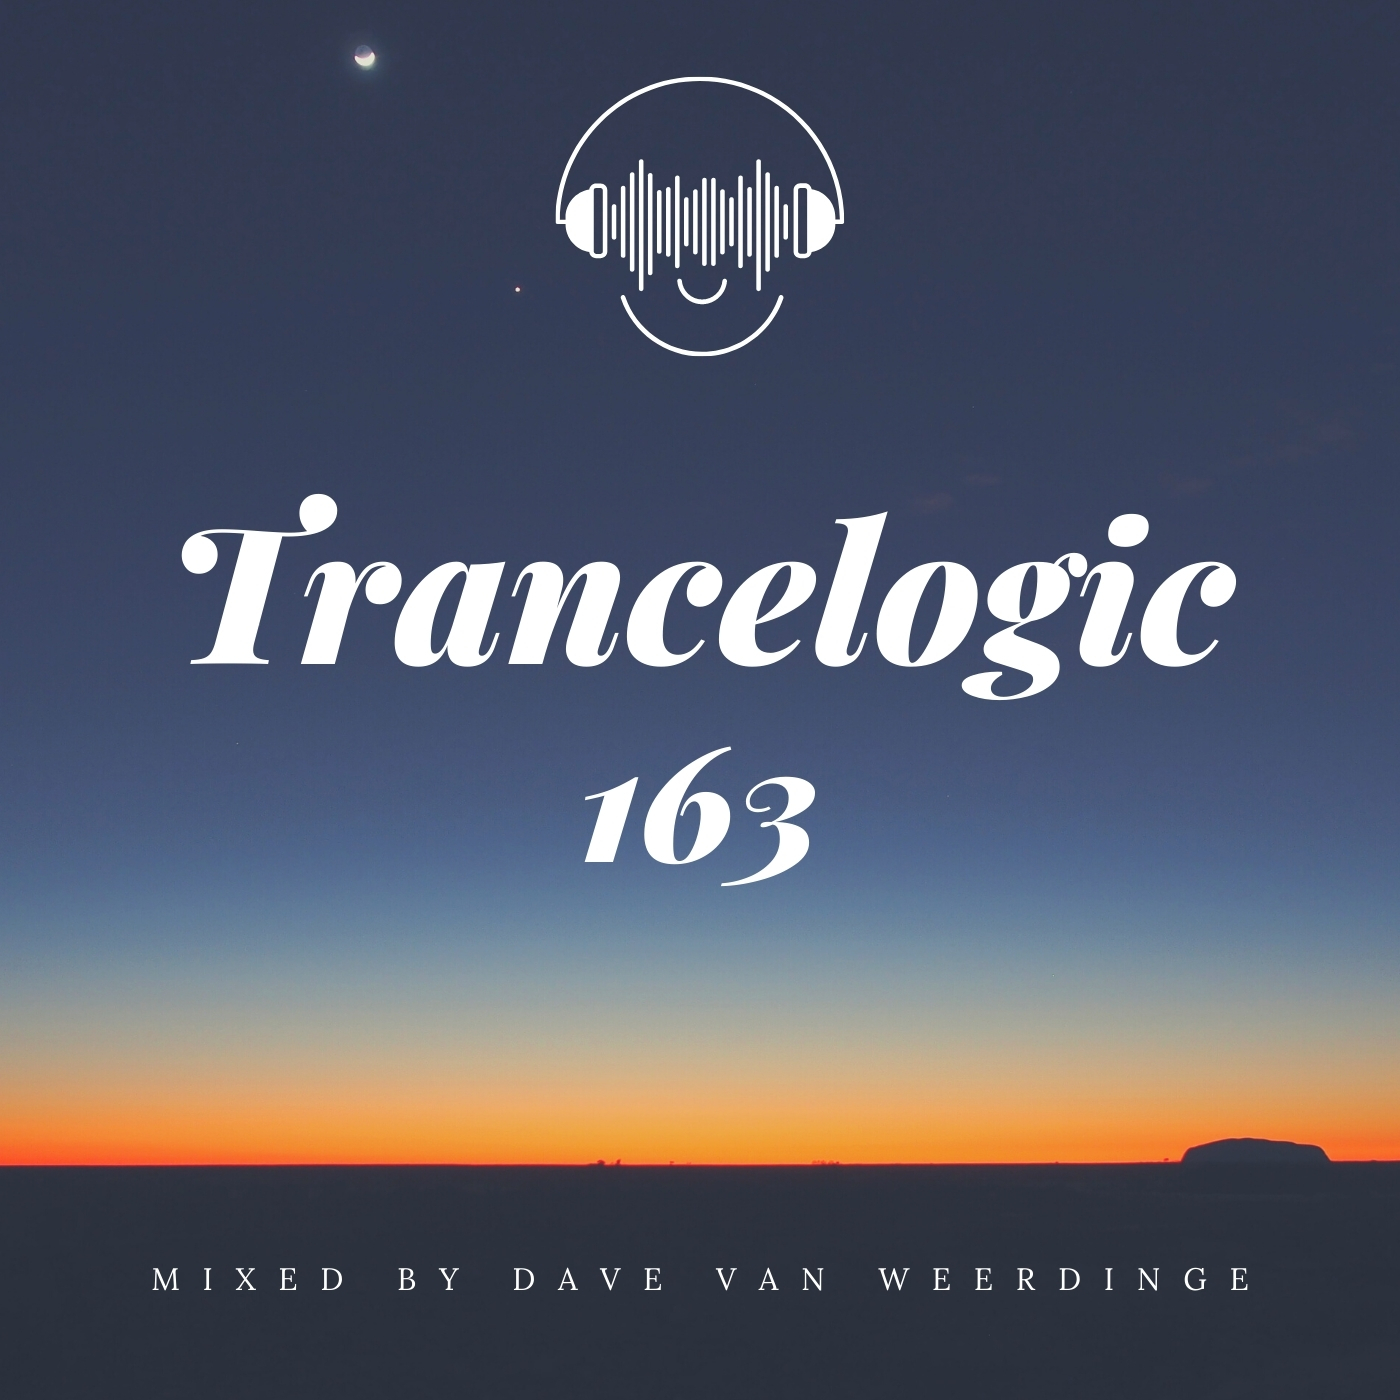 Trancelogic 163 by Dave van Weerdinge